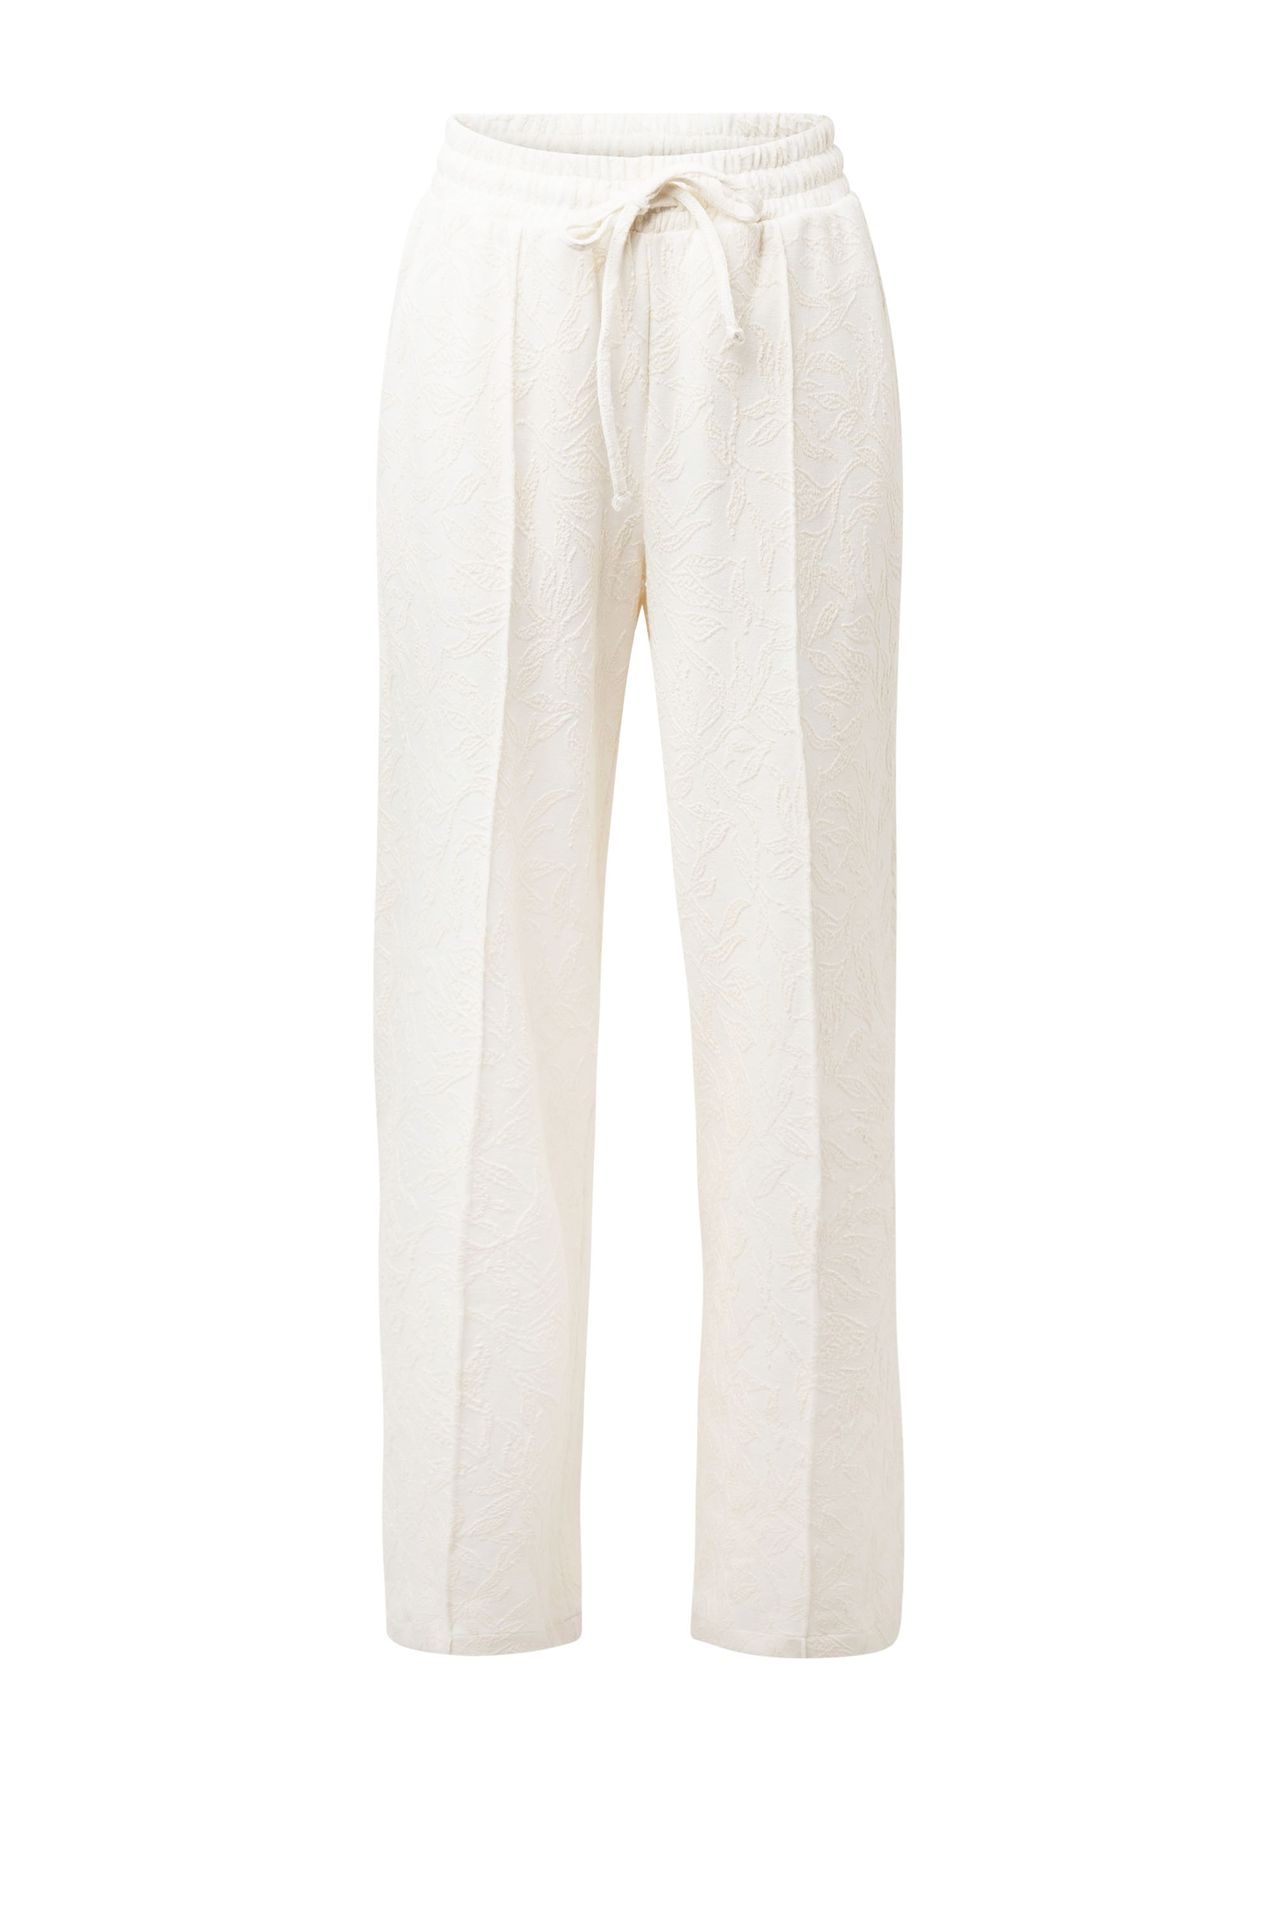 Norah Off white pantalon off-white 214591-101